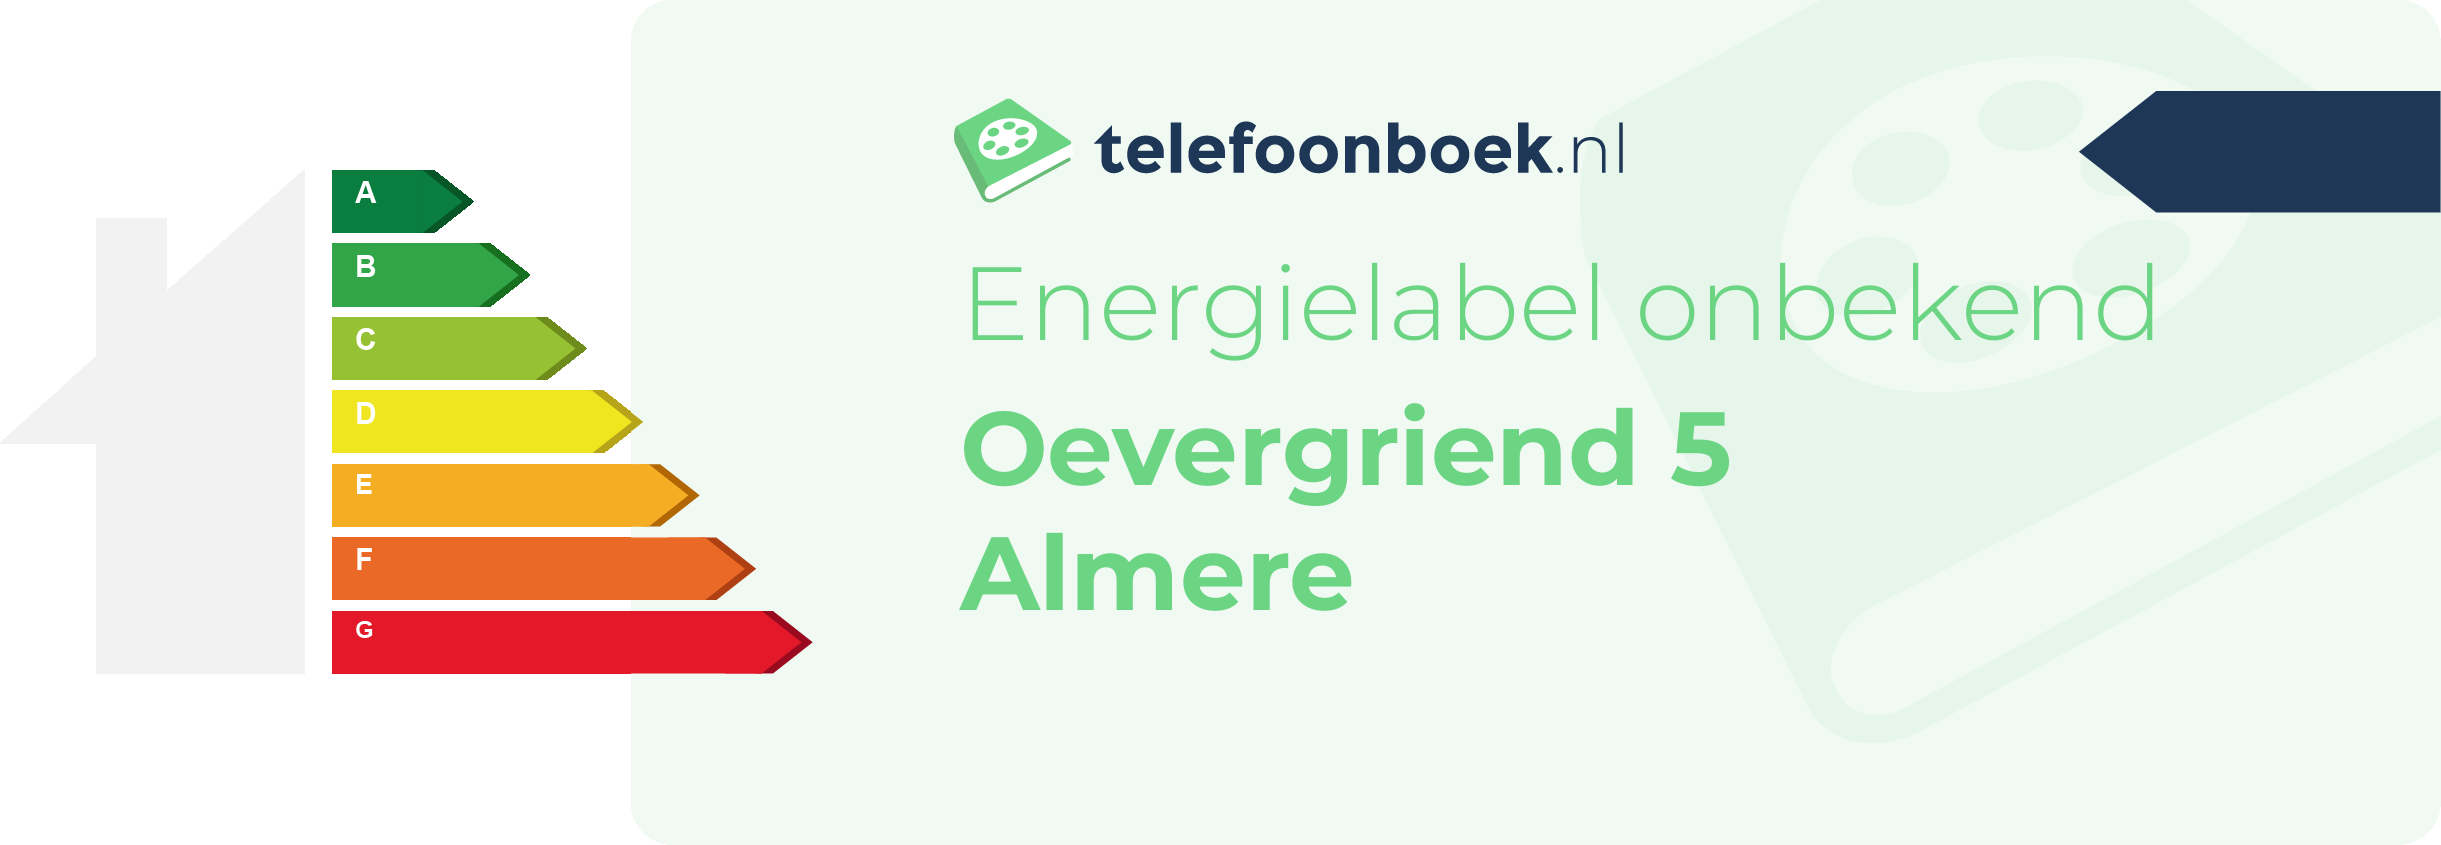 Energielabel Oevergriend 5 Almere